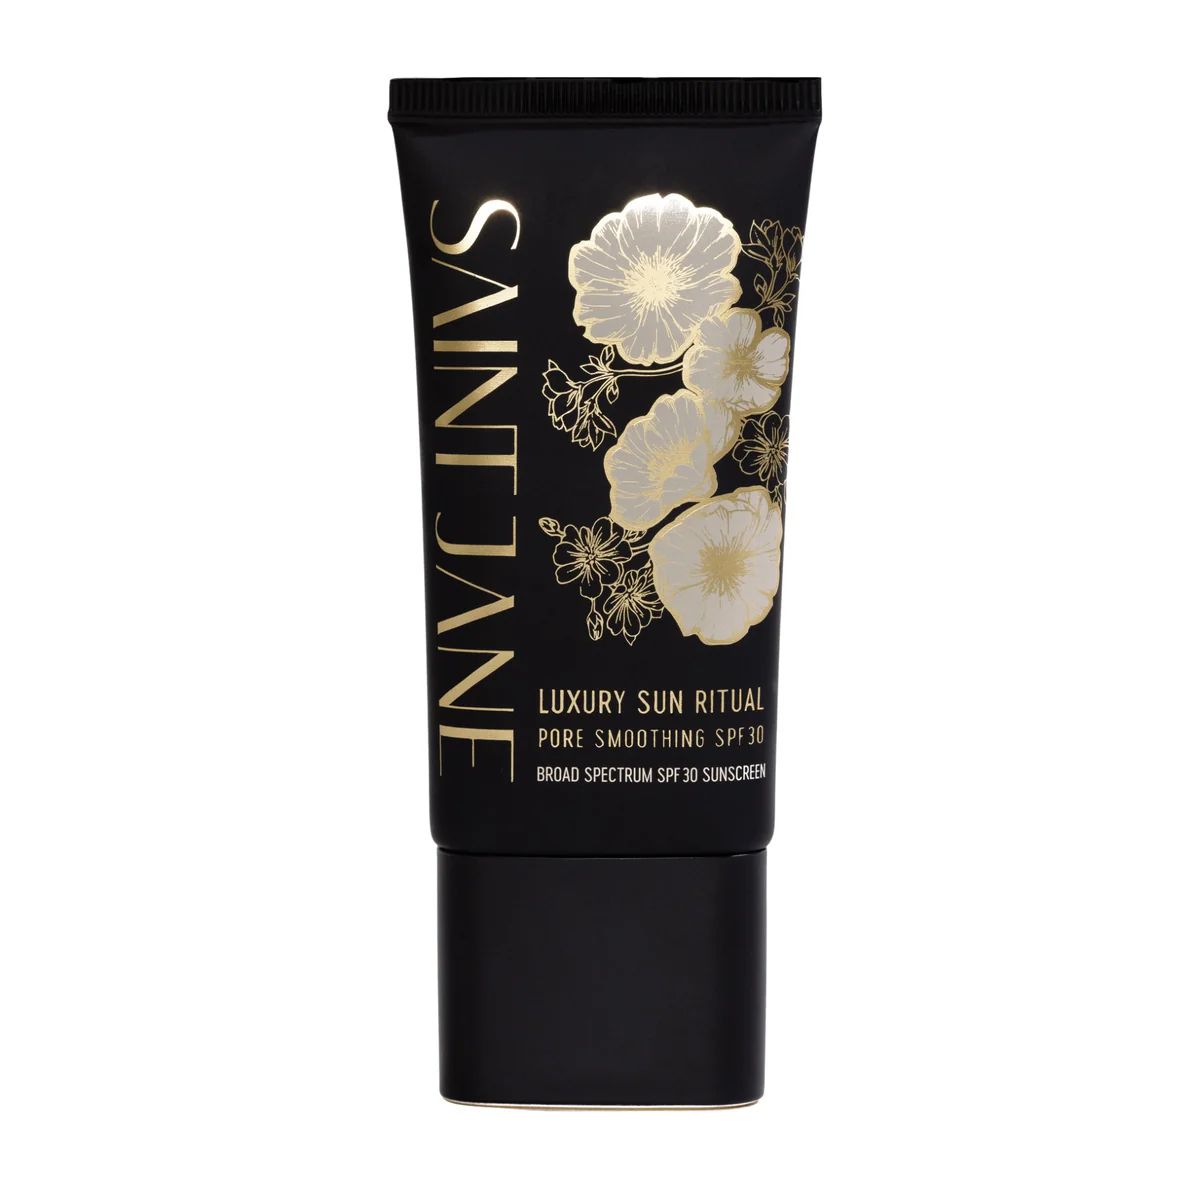 Luxury Sun Ritual - Pore Smoothing SPF 30 Sunscreen | Saint Jane Beauty